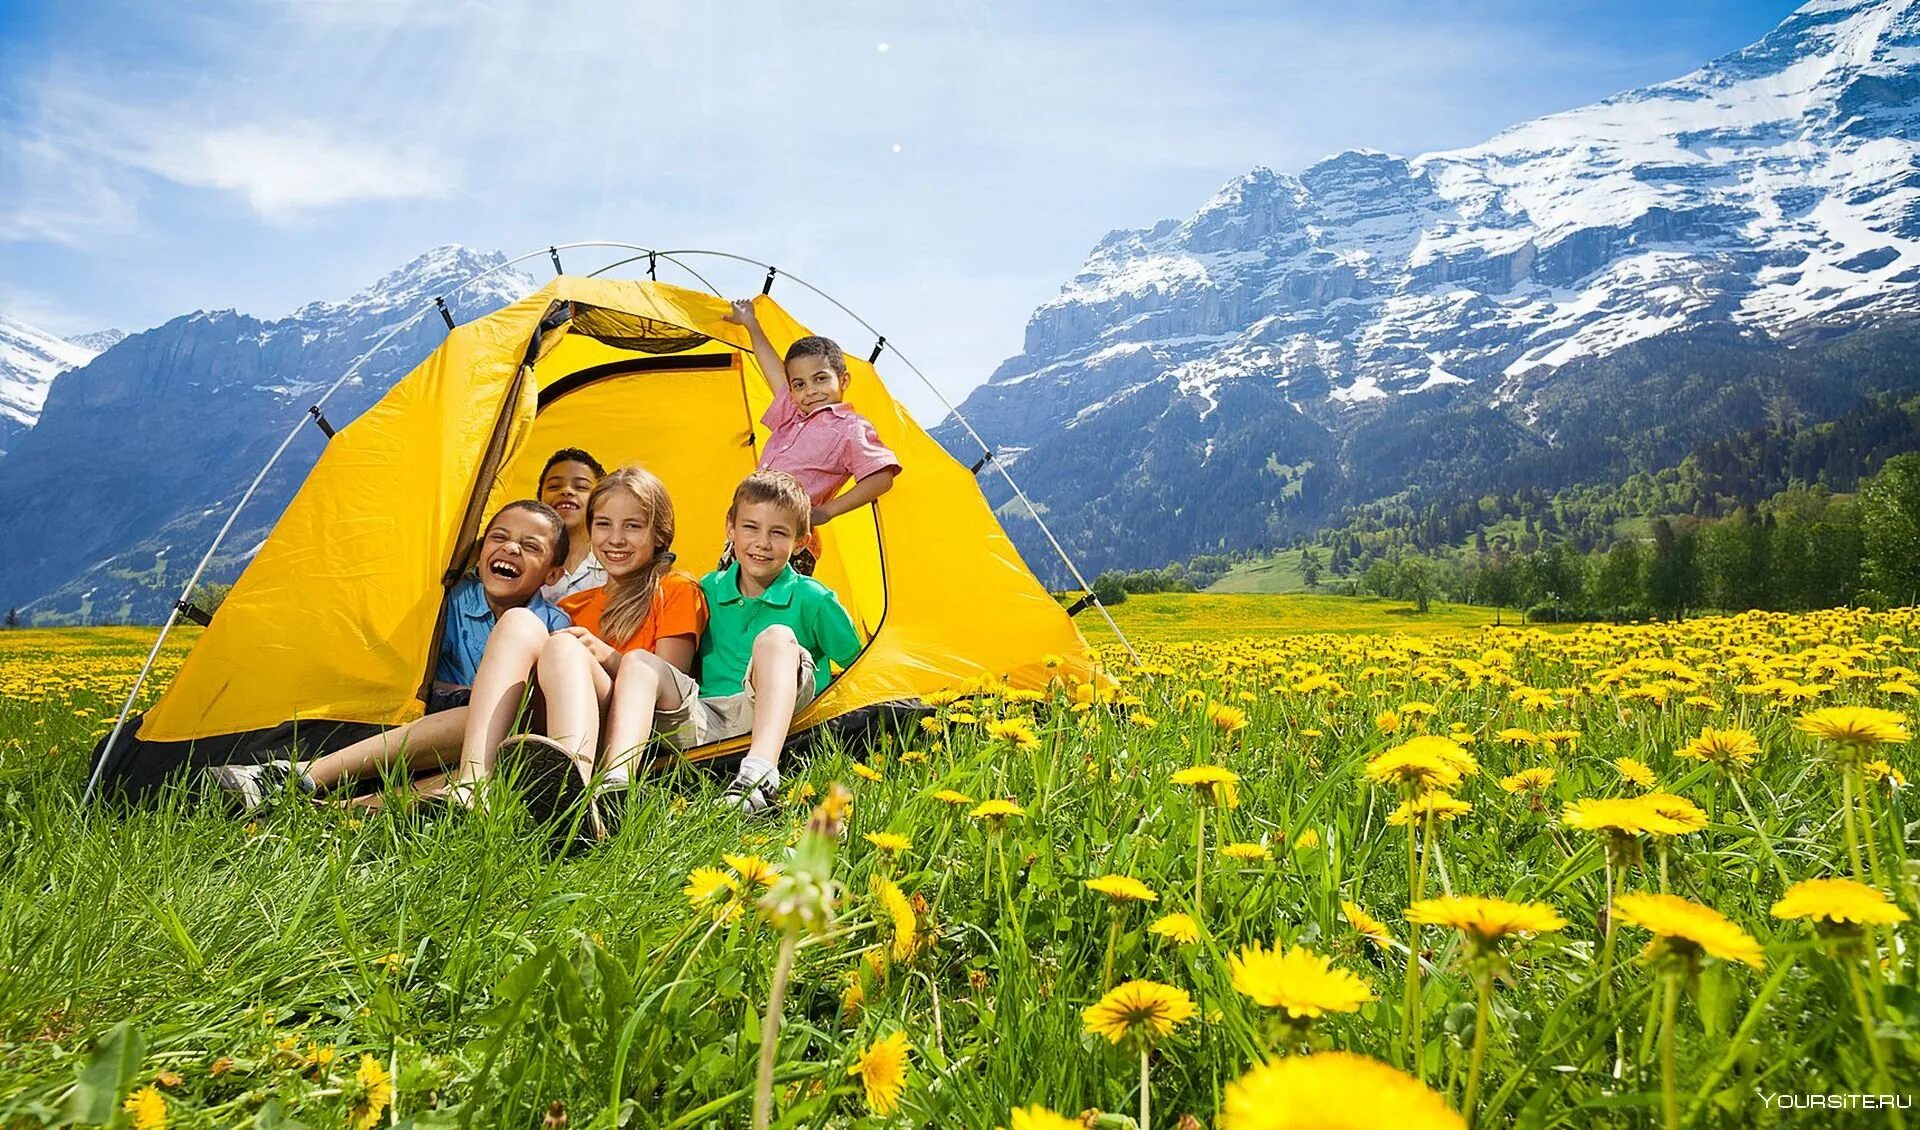 Палатка на природе. Поход с детьми на природу. Поход семьей на природу. Семья на природе с палаткой.